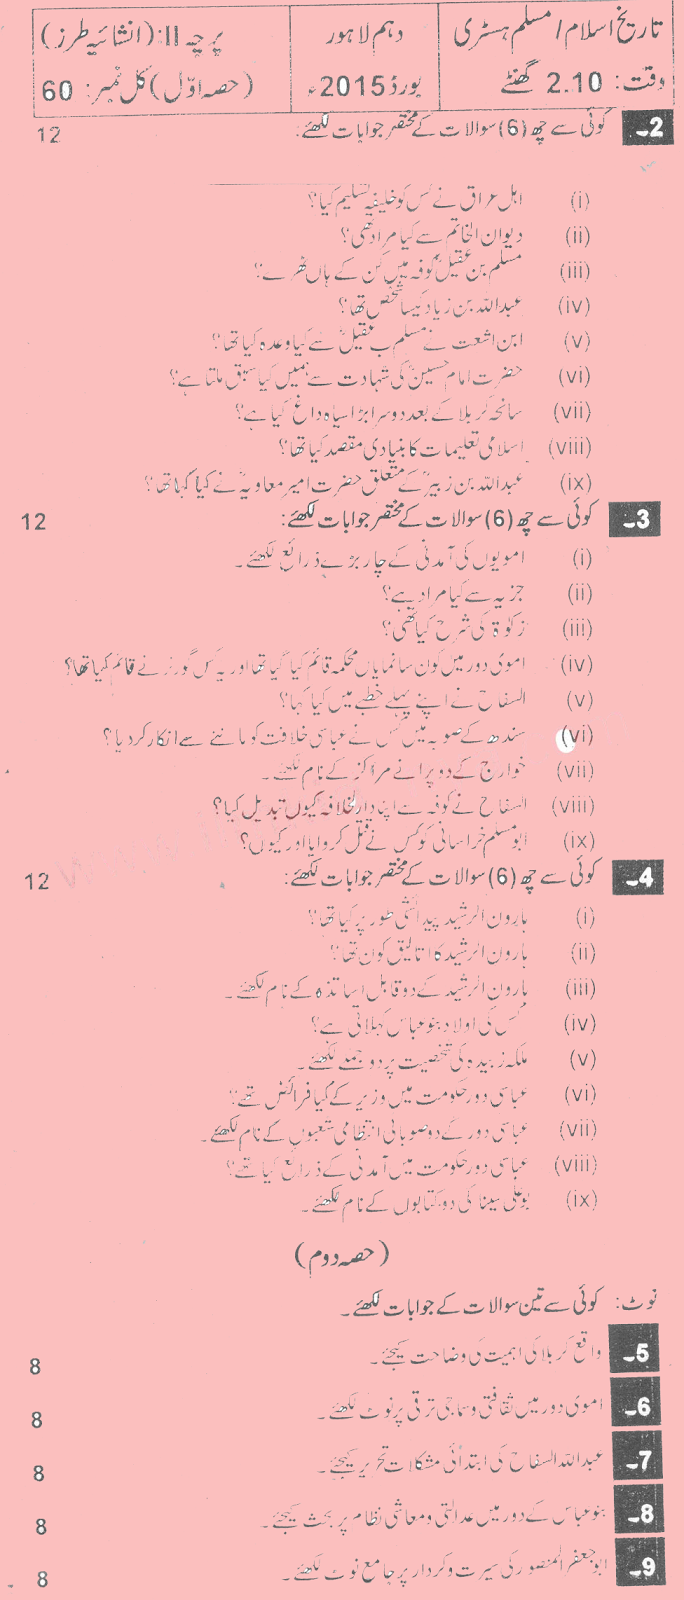 https://1.bp.blogspot.com/-wx9XrpUZj3s/WapASqVo3CI/AAAAAAAAAu8/WwGNnUYxvc4qL4L-6mUny4eOkWZQh0nLgCLcBGAs/s1600/Past-Papers-2015-Lahore-Board-10th-Class-History-of-Islam-Subjective.png